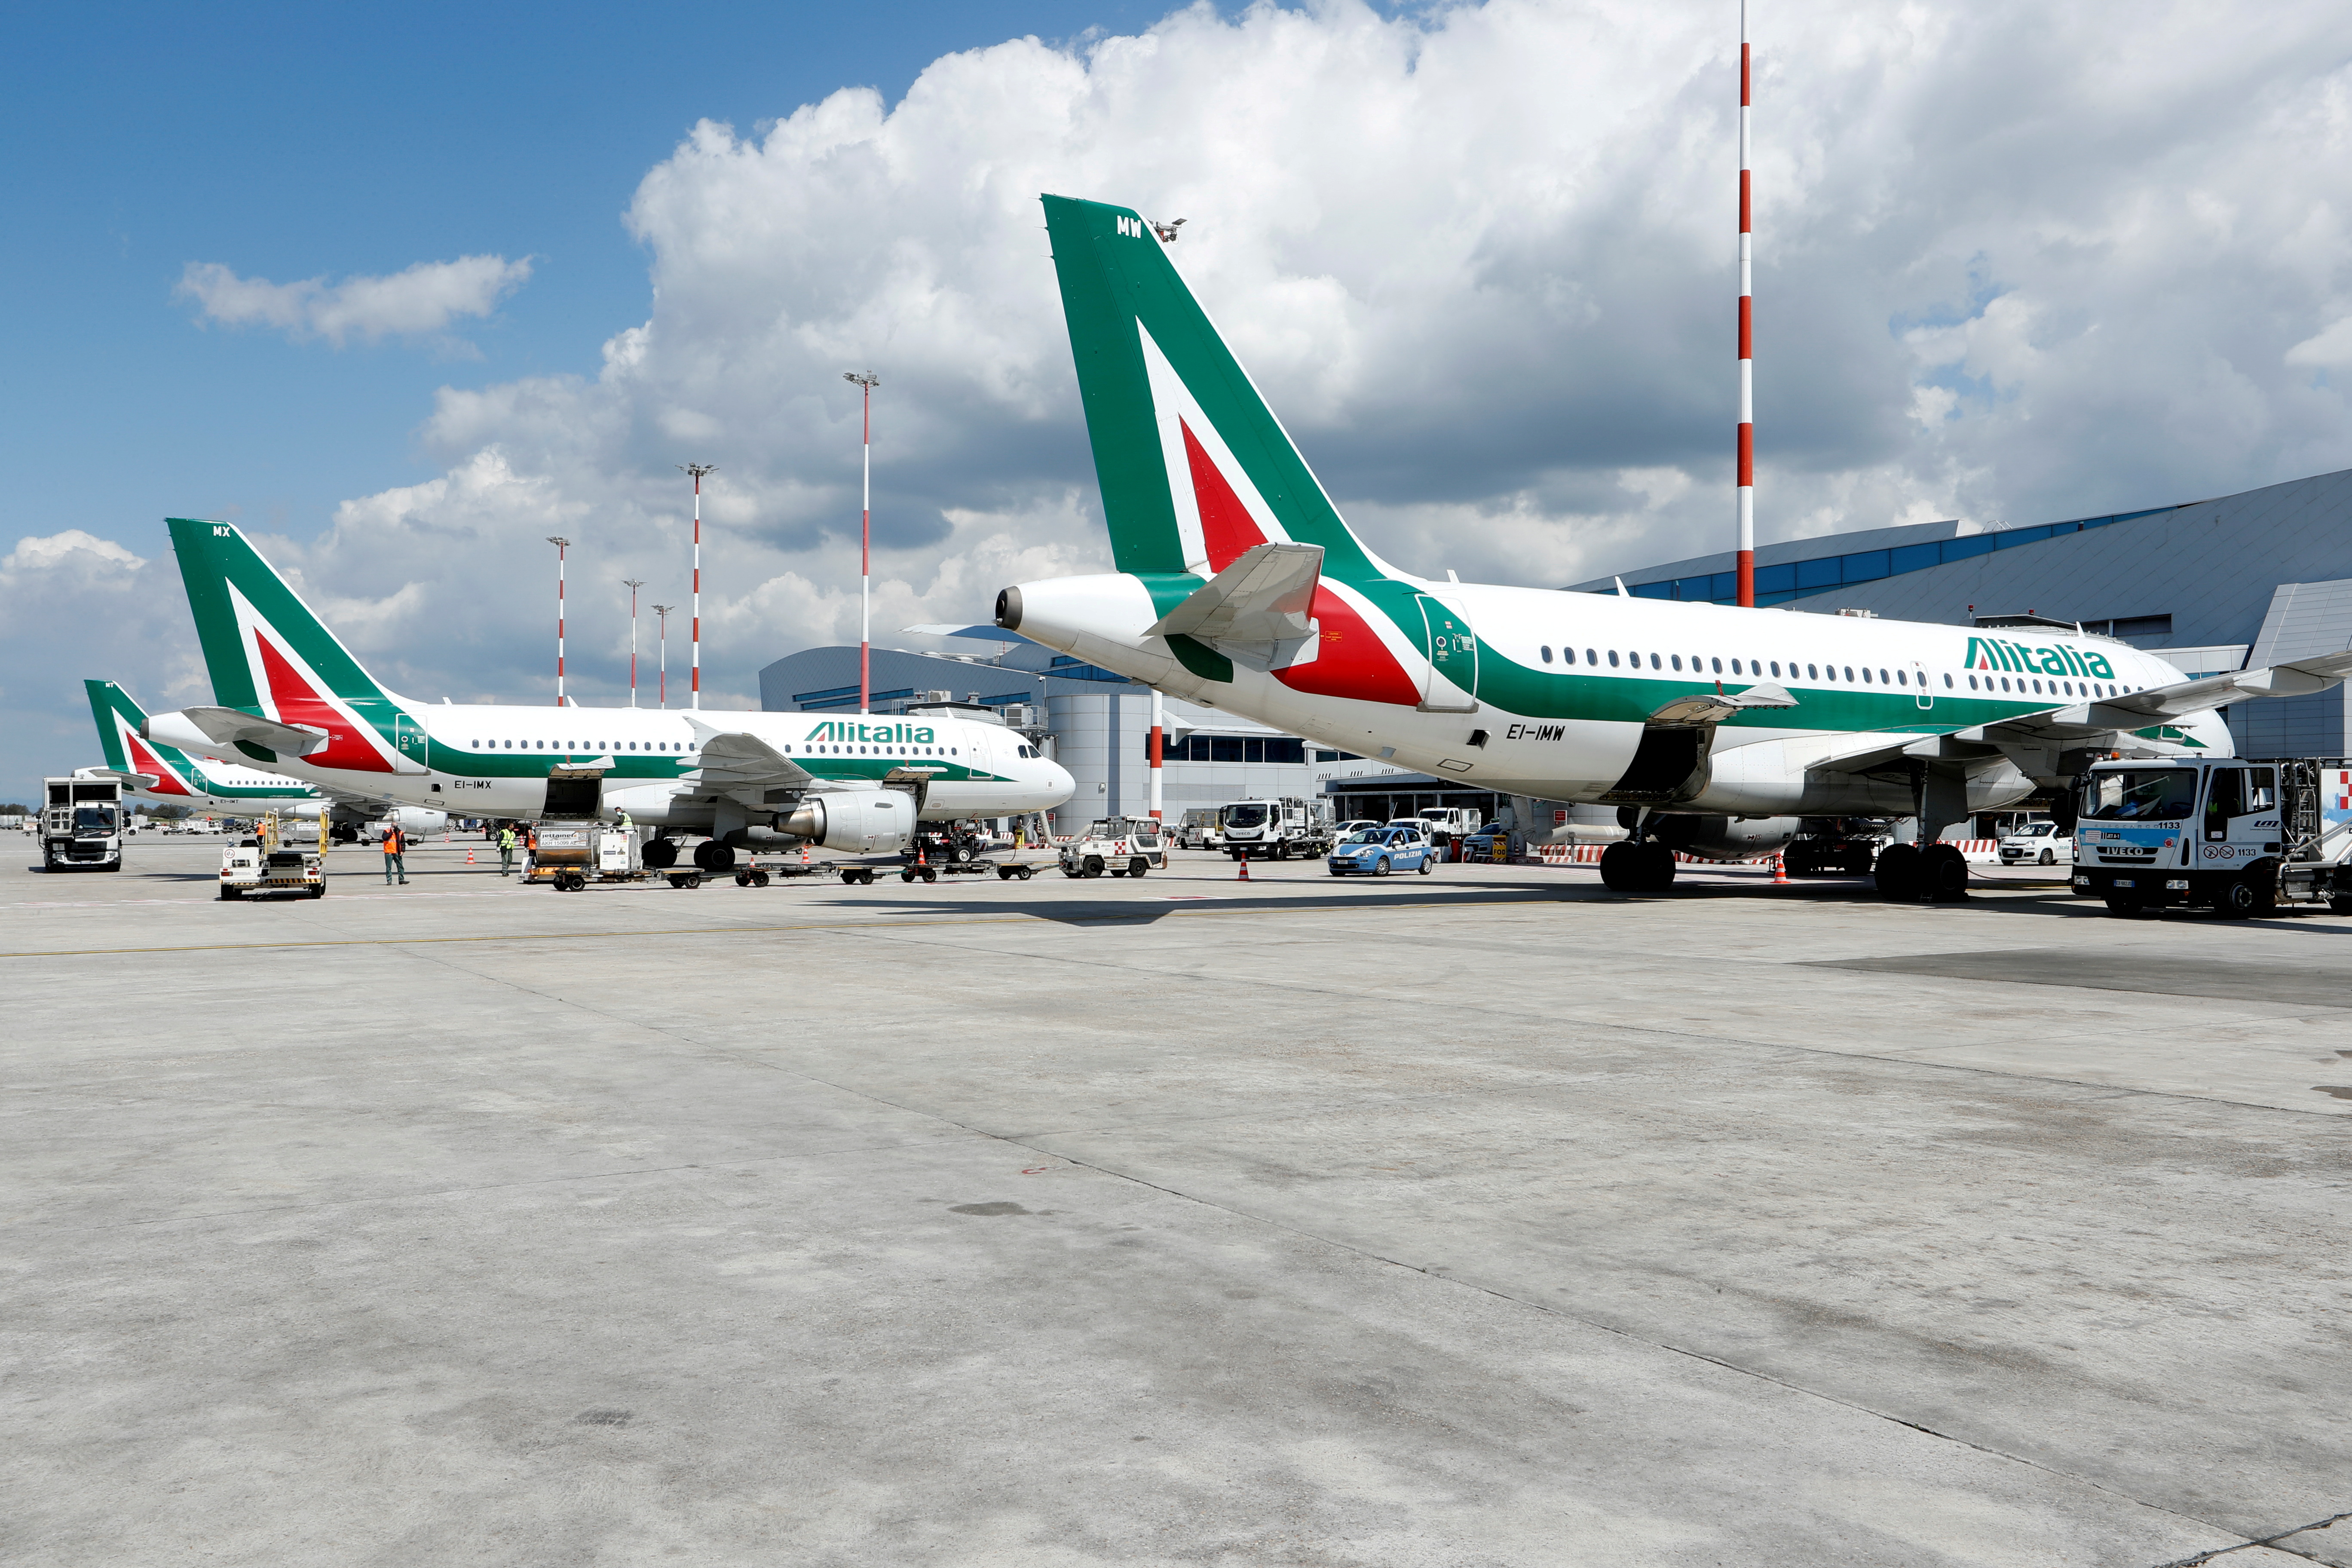 Alitalia planes are seen on the tarmac at Fiumicino International Airport in Rome